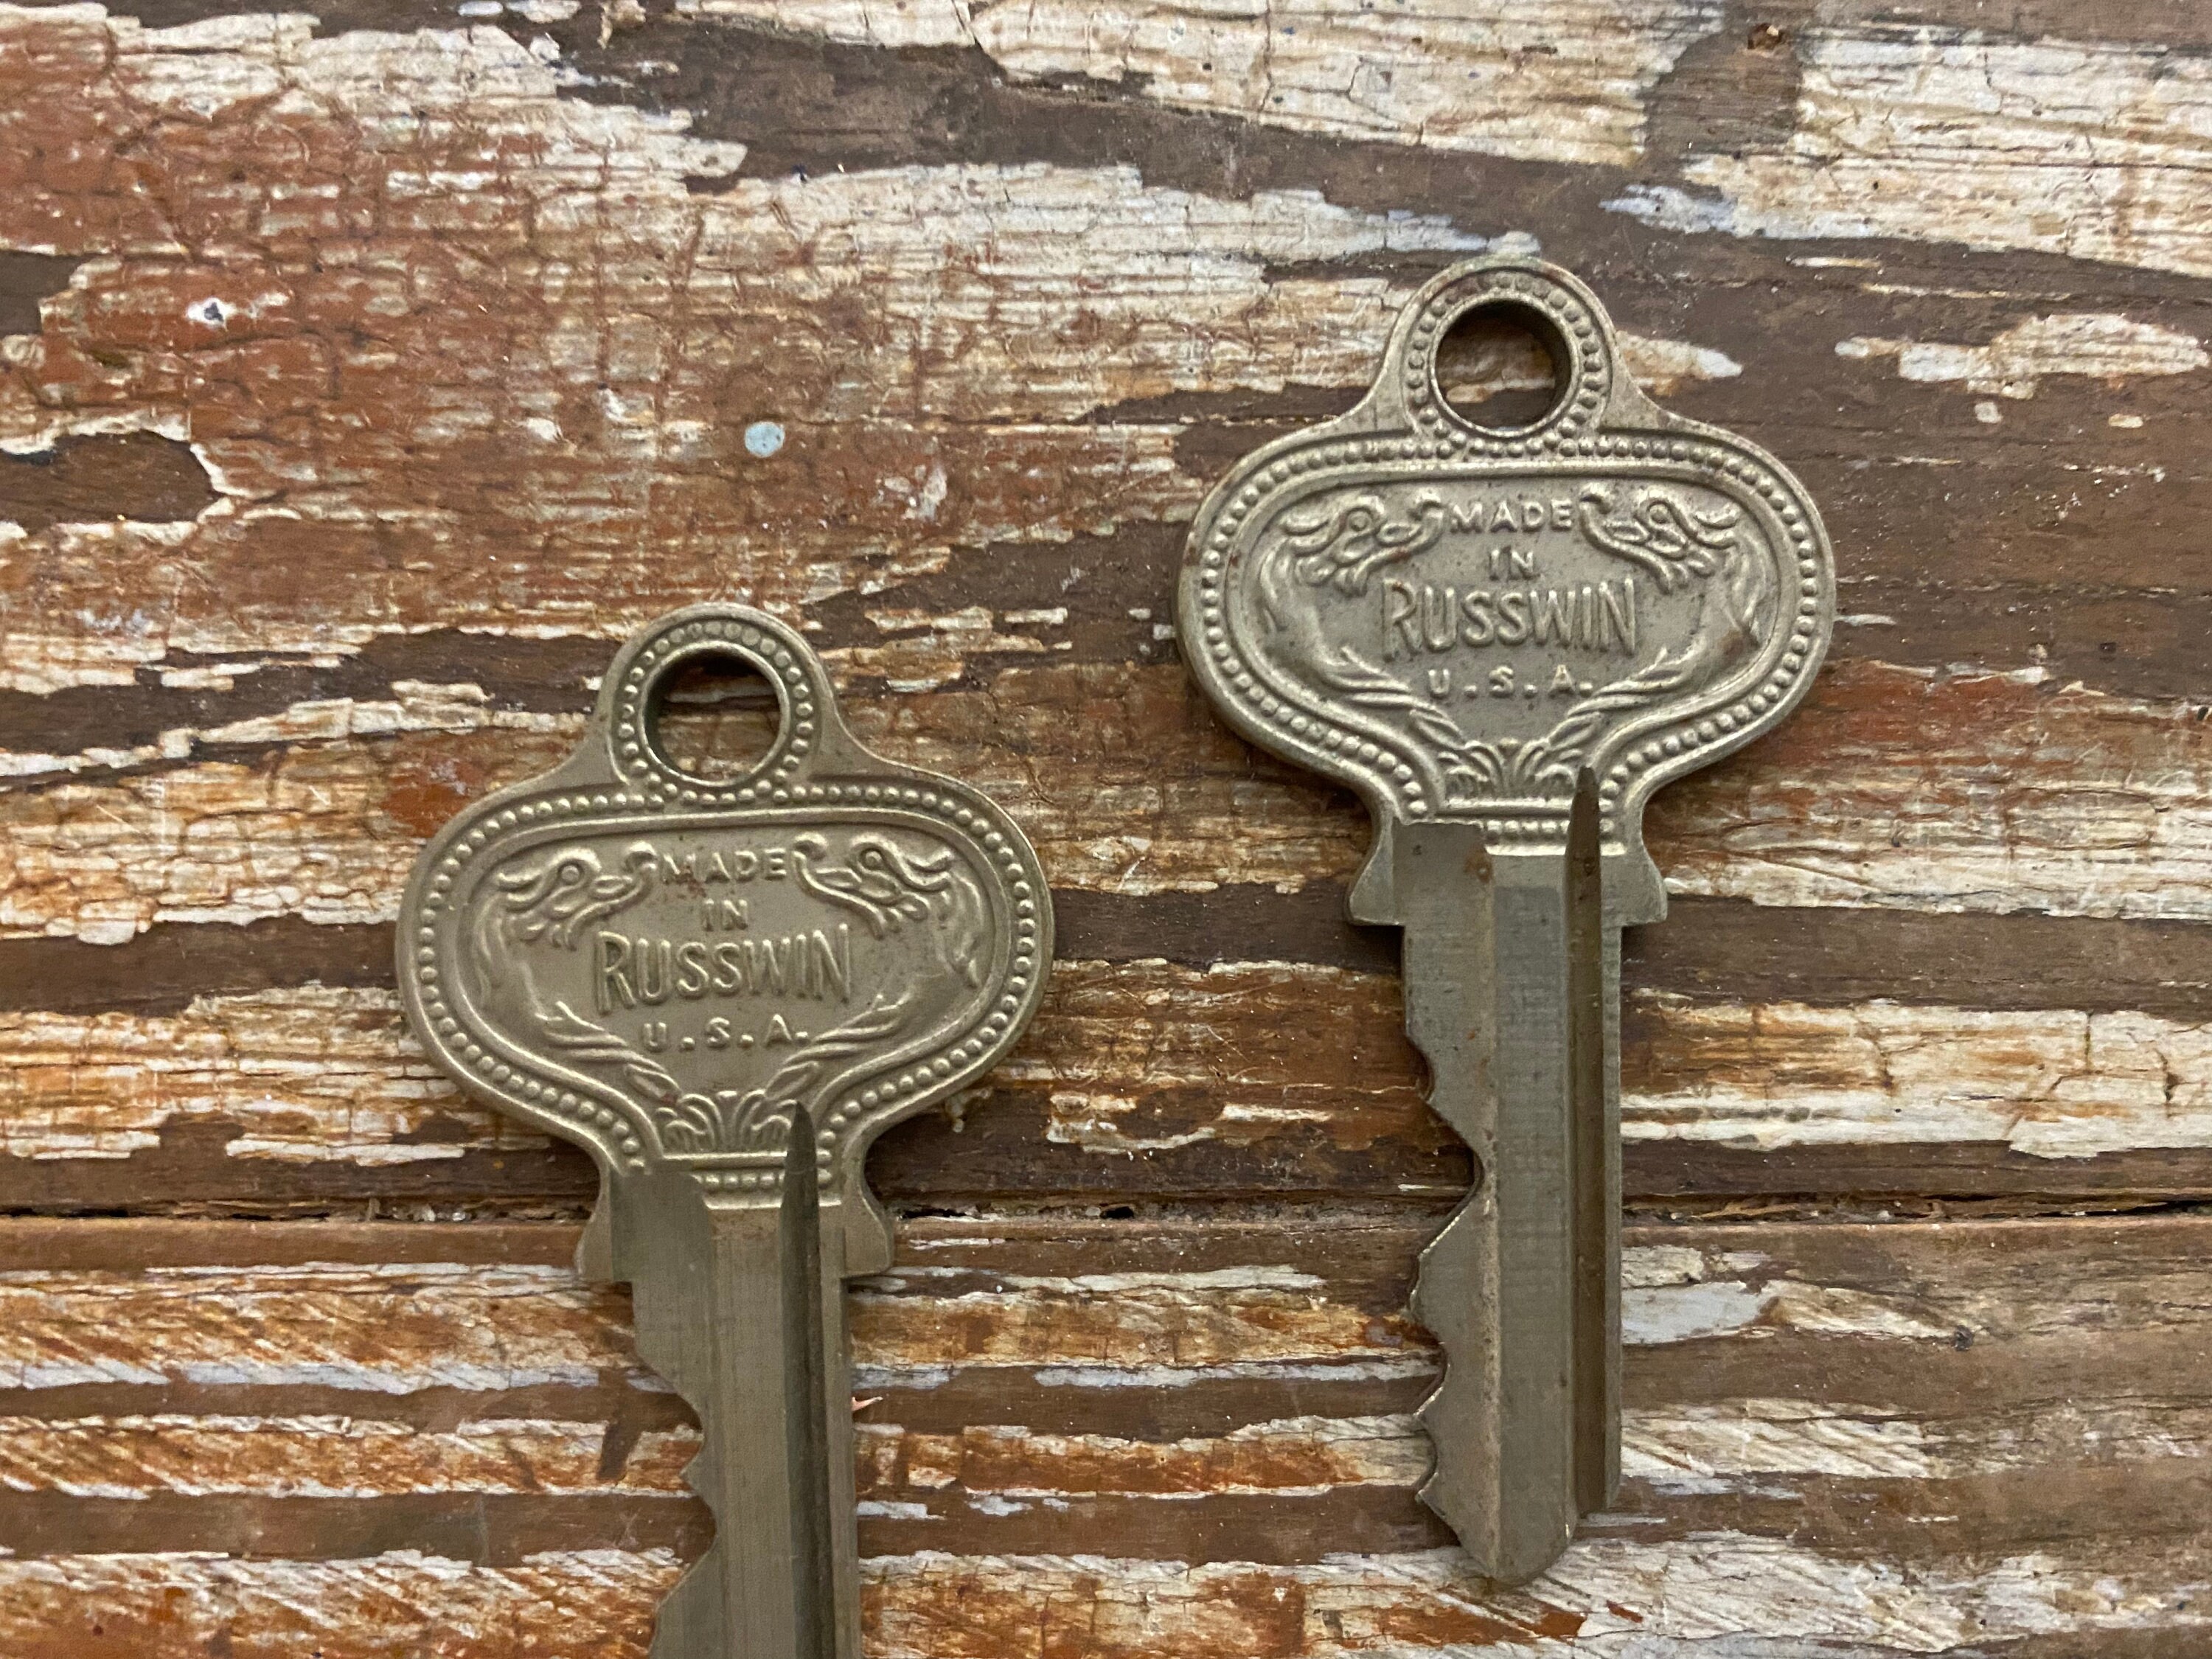 Vintage Keys Lot 6 Pcs. Wholesale Antique Keys for Craft and Decor. Old  Skeleton Keys. Soviet Flat Keys. Russian Metal Keys USSR Original 